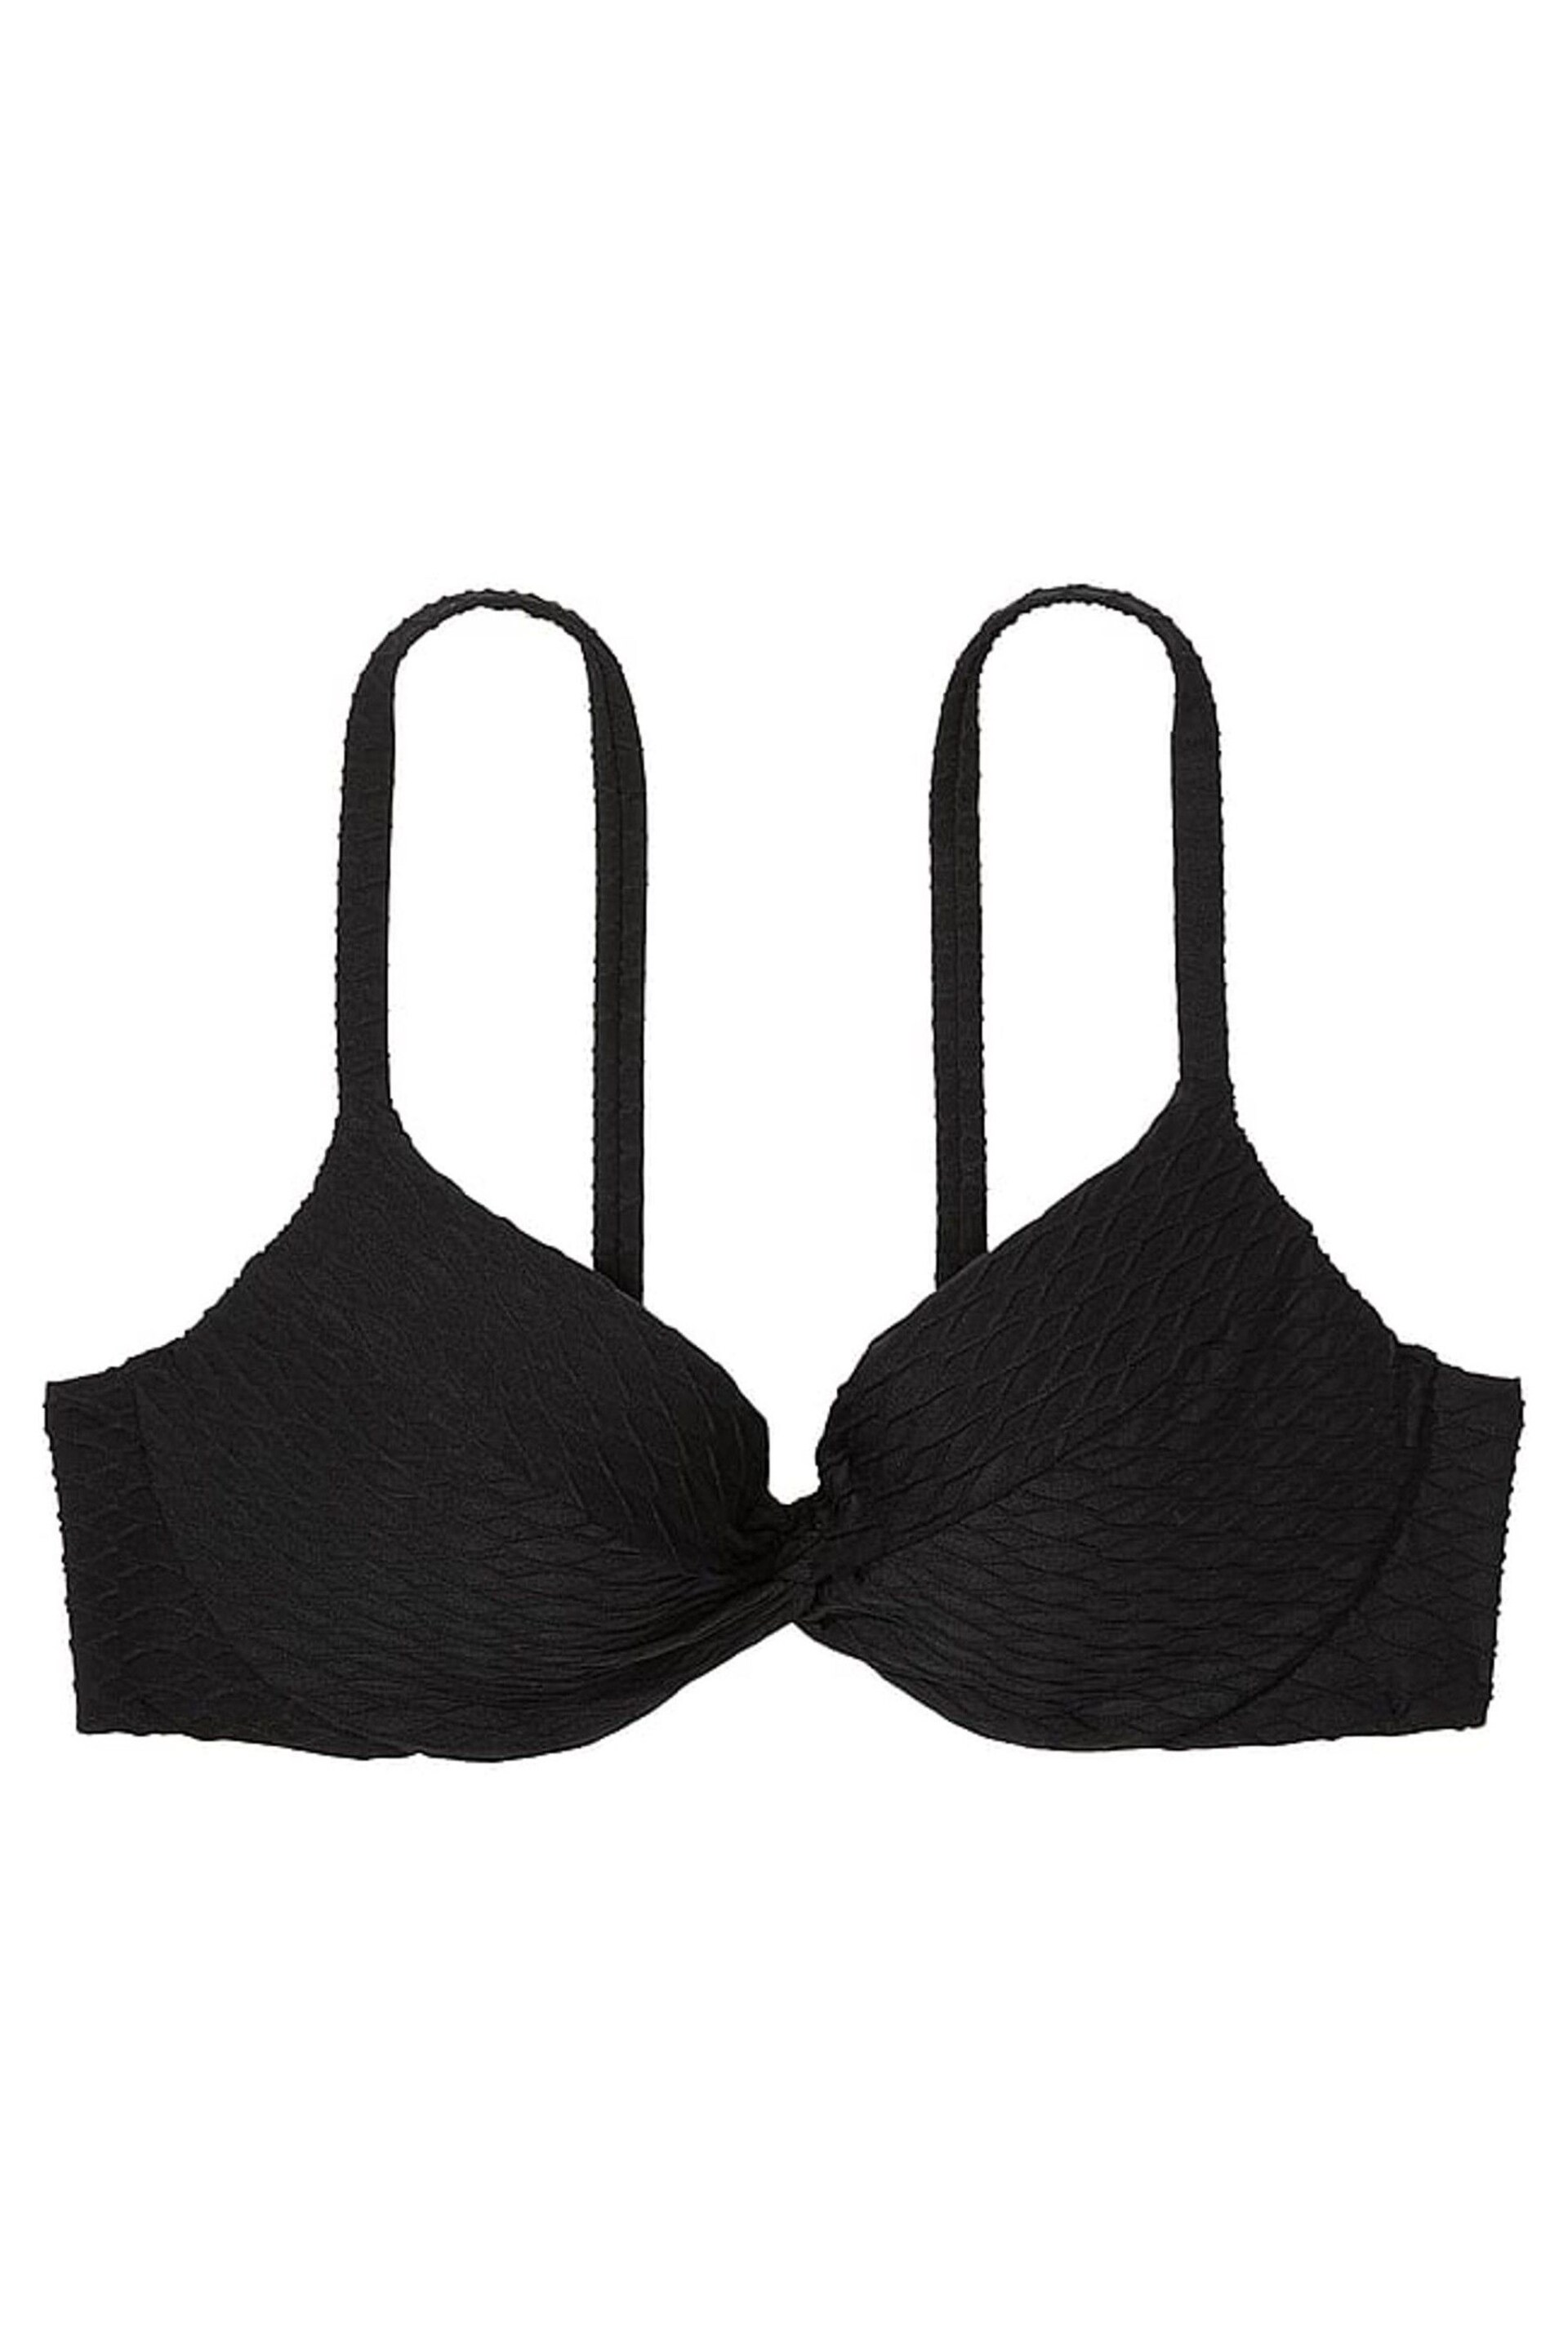 Victoria's Secret Black Fishnet Push Up Swim Bikini Top - Image 3 of 3